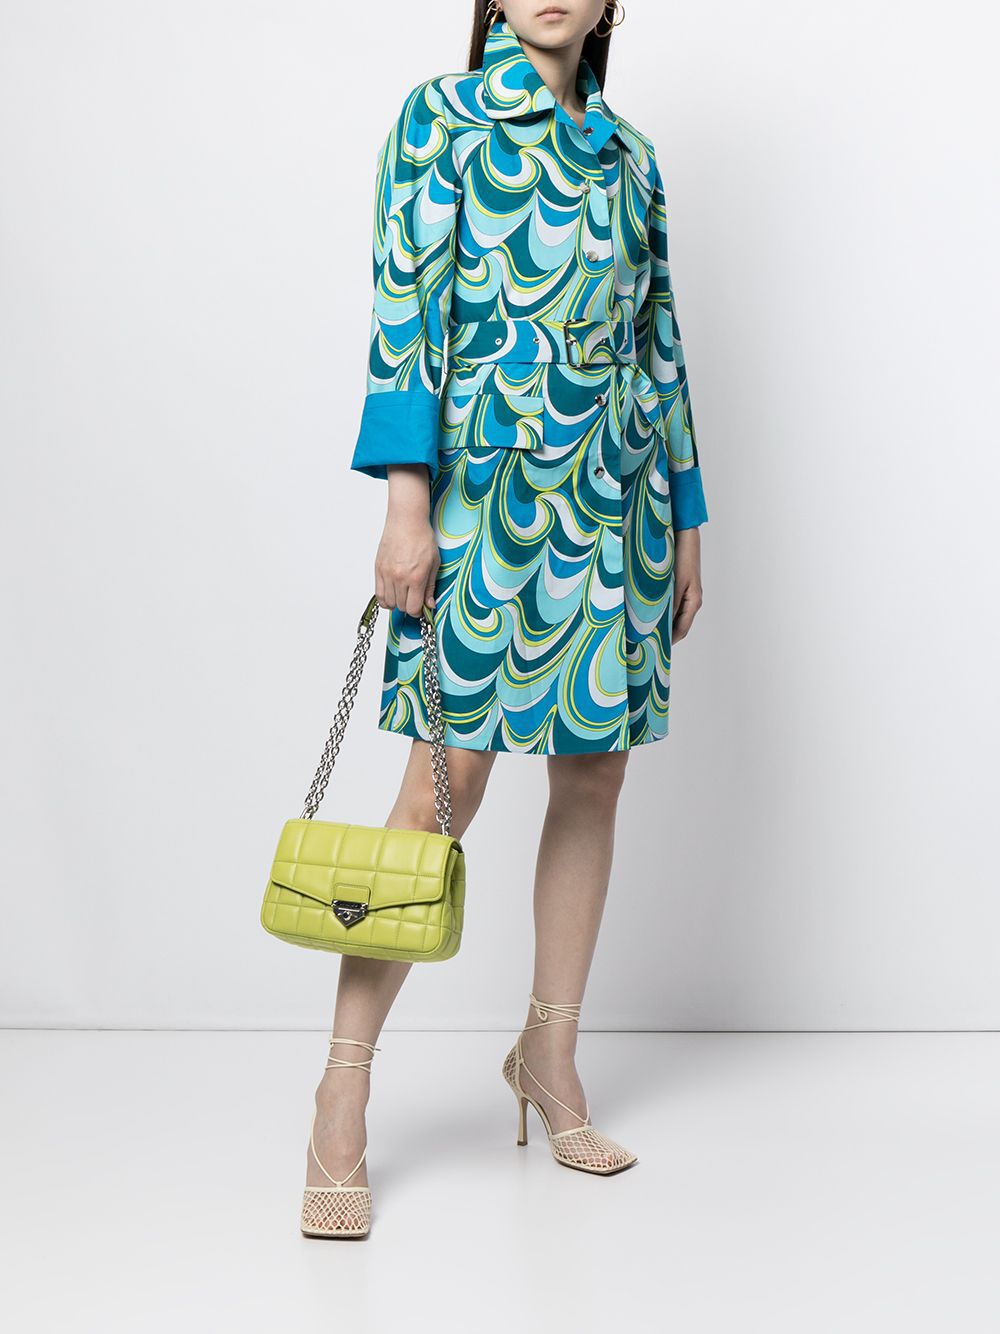 MICHAEL KORS SOHO QUILTED LEATHER SHOULDER BAG – Caroline's Fashion Luxuries